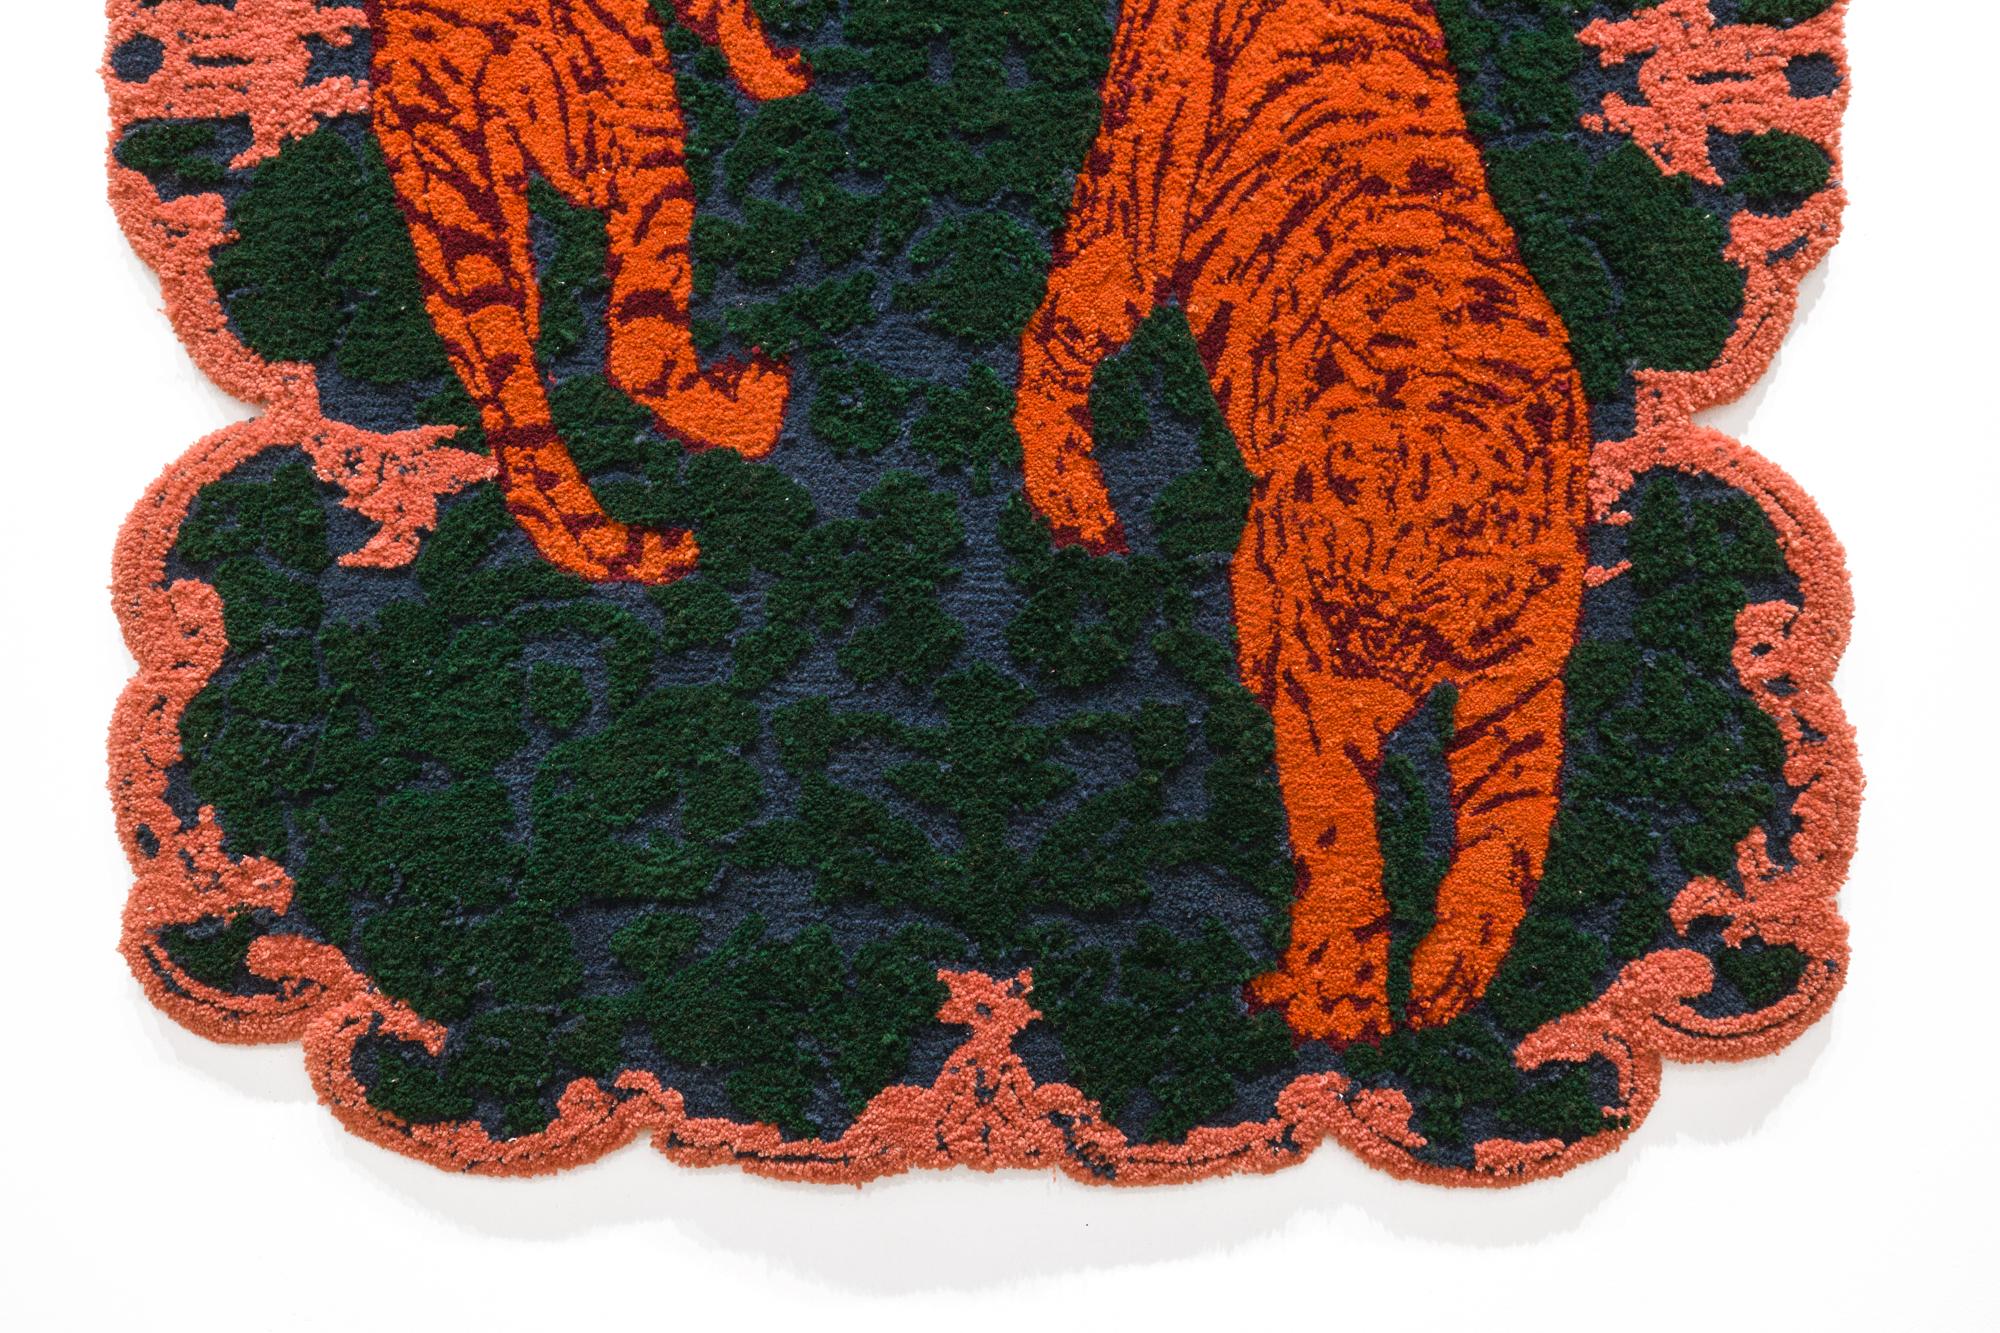 American Orange Tiger Rug, Blue, Green, and Pink, artist and workshop collaboration For Sale